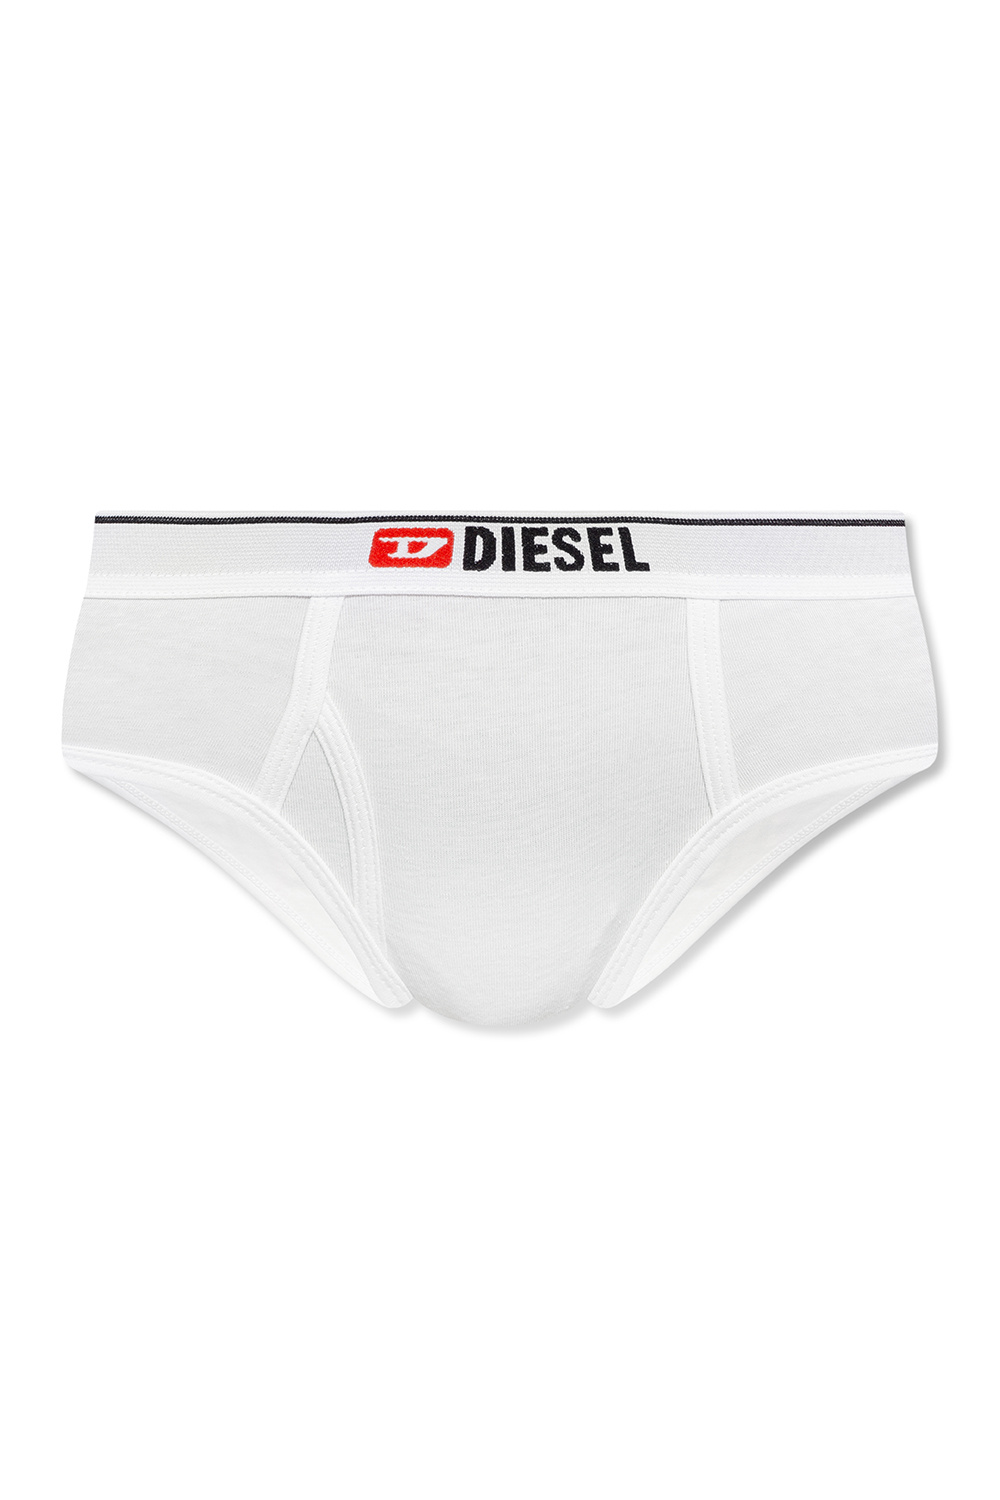 Diesel ‘UFPN-Oxys’ briefs with logo